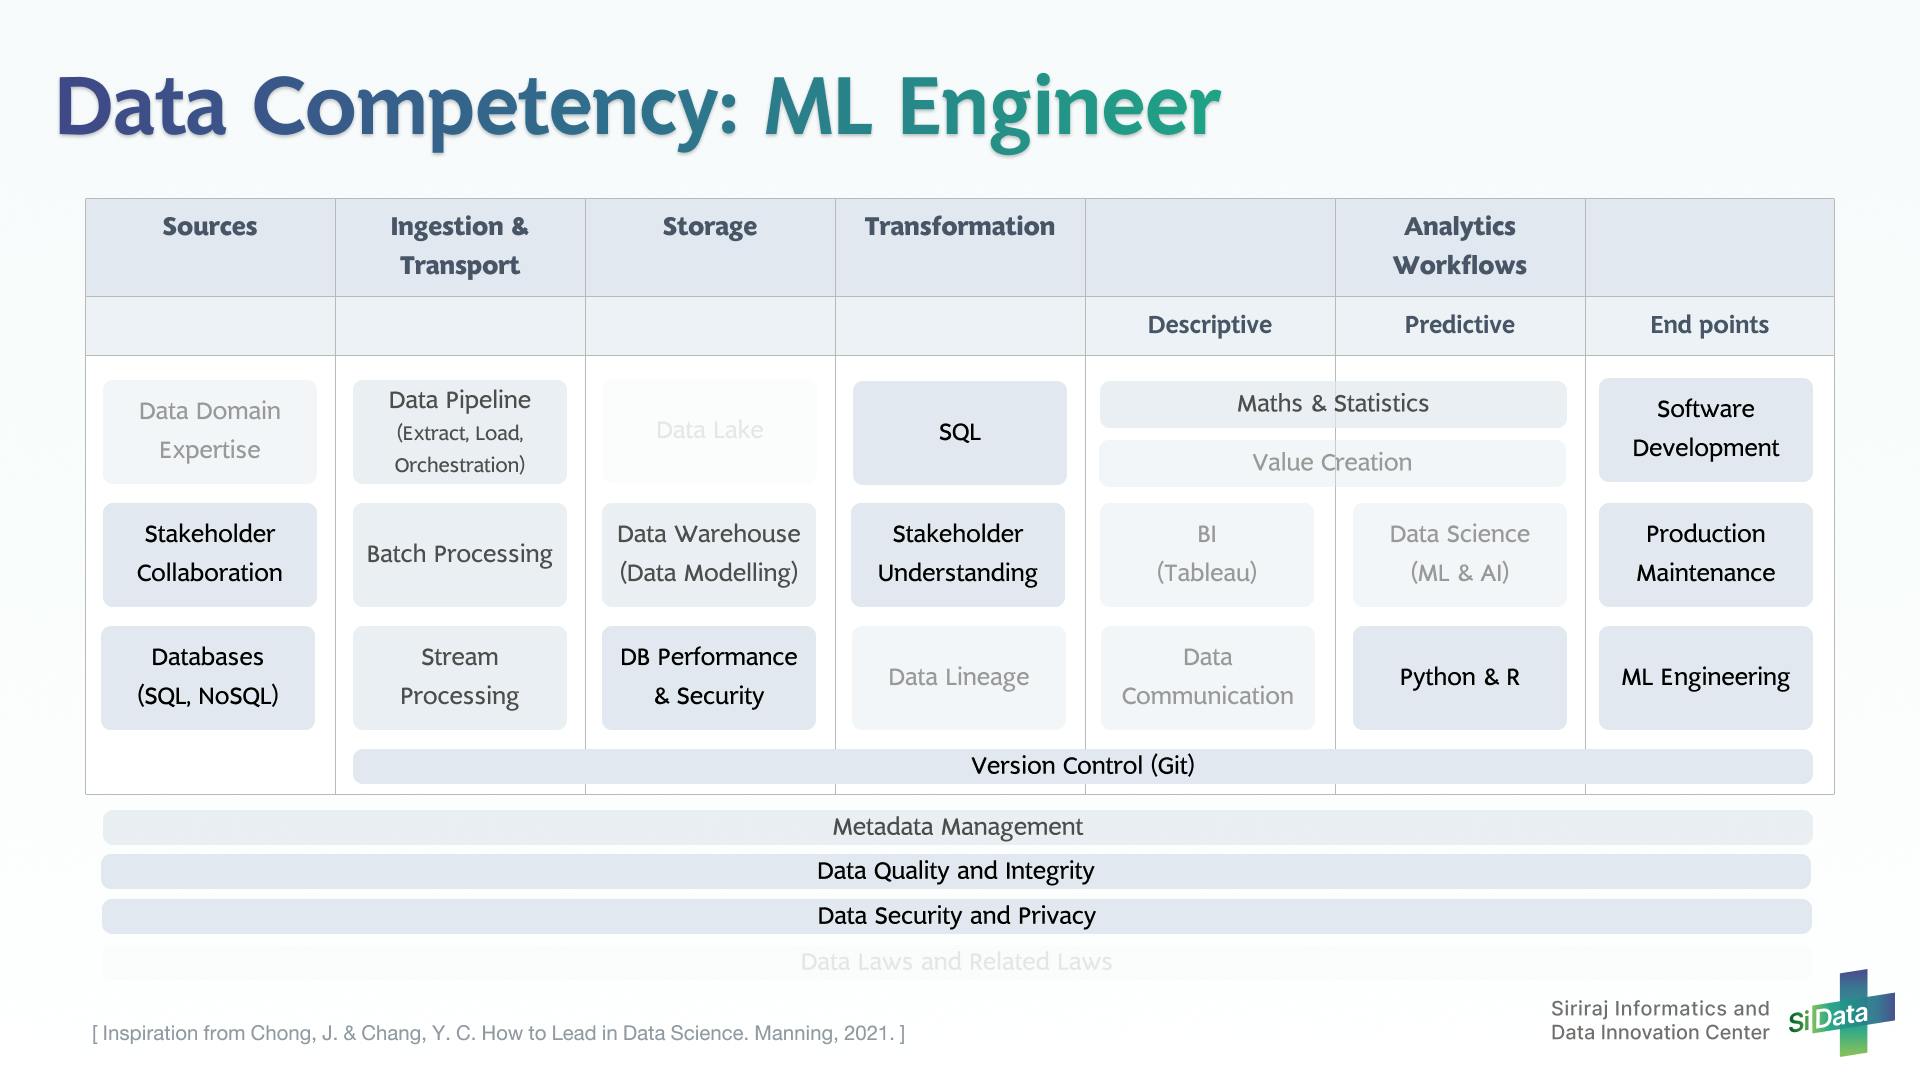 Data Competency_6 ML Engineer_20220425.png